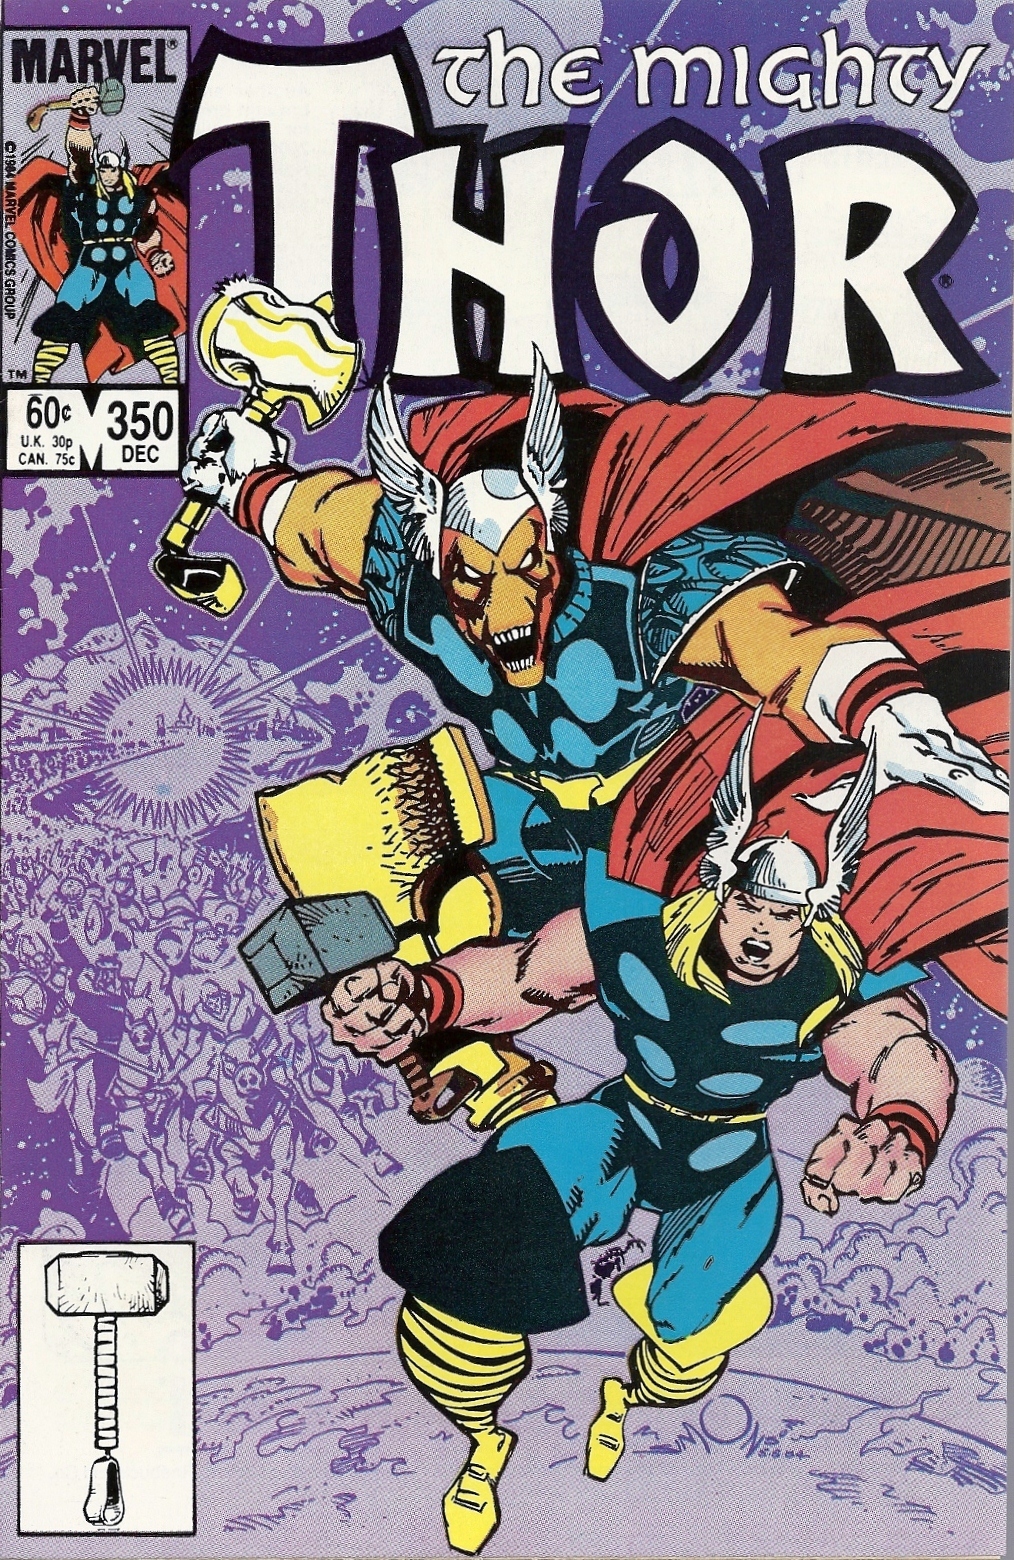 Thor Vol. 1 #350